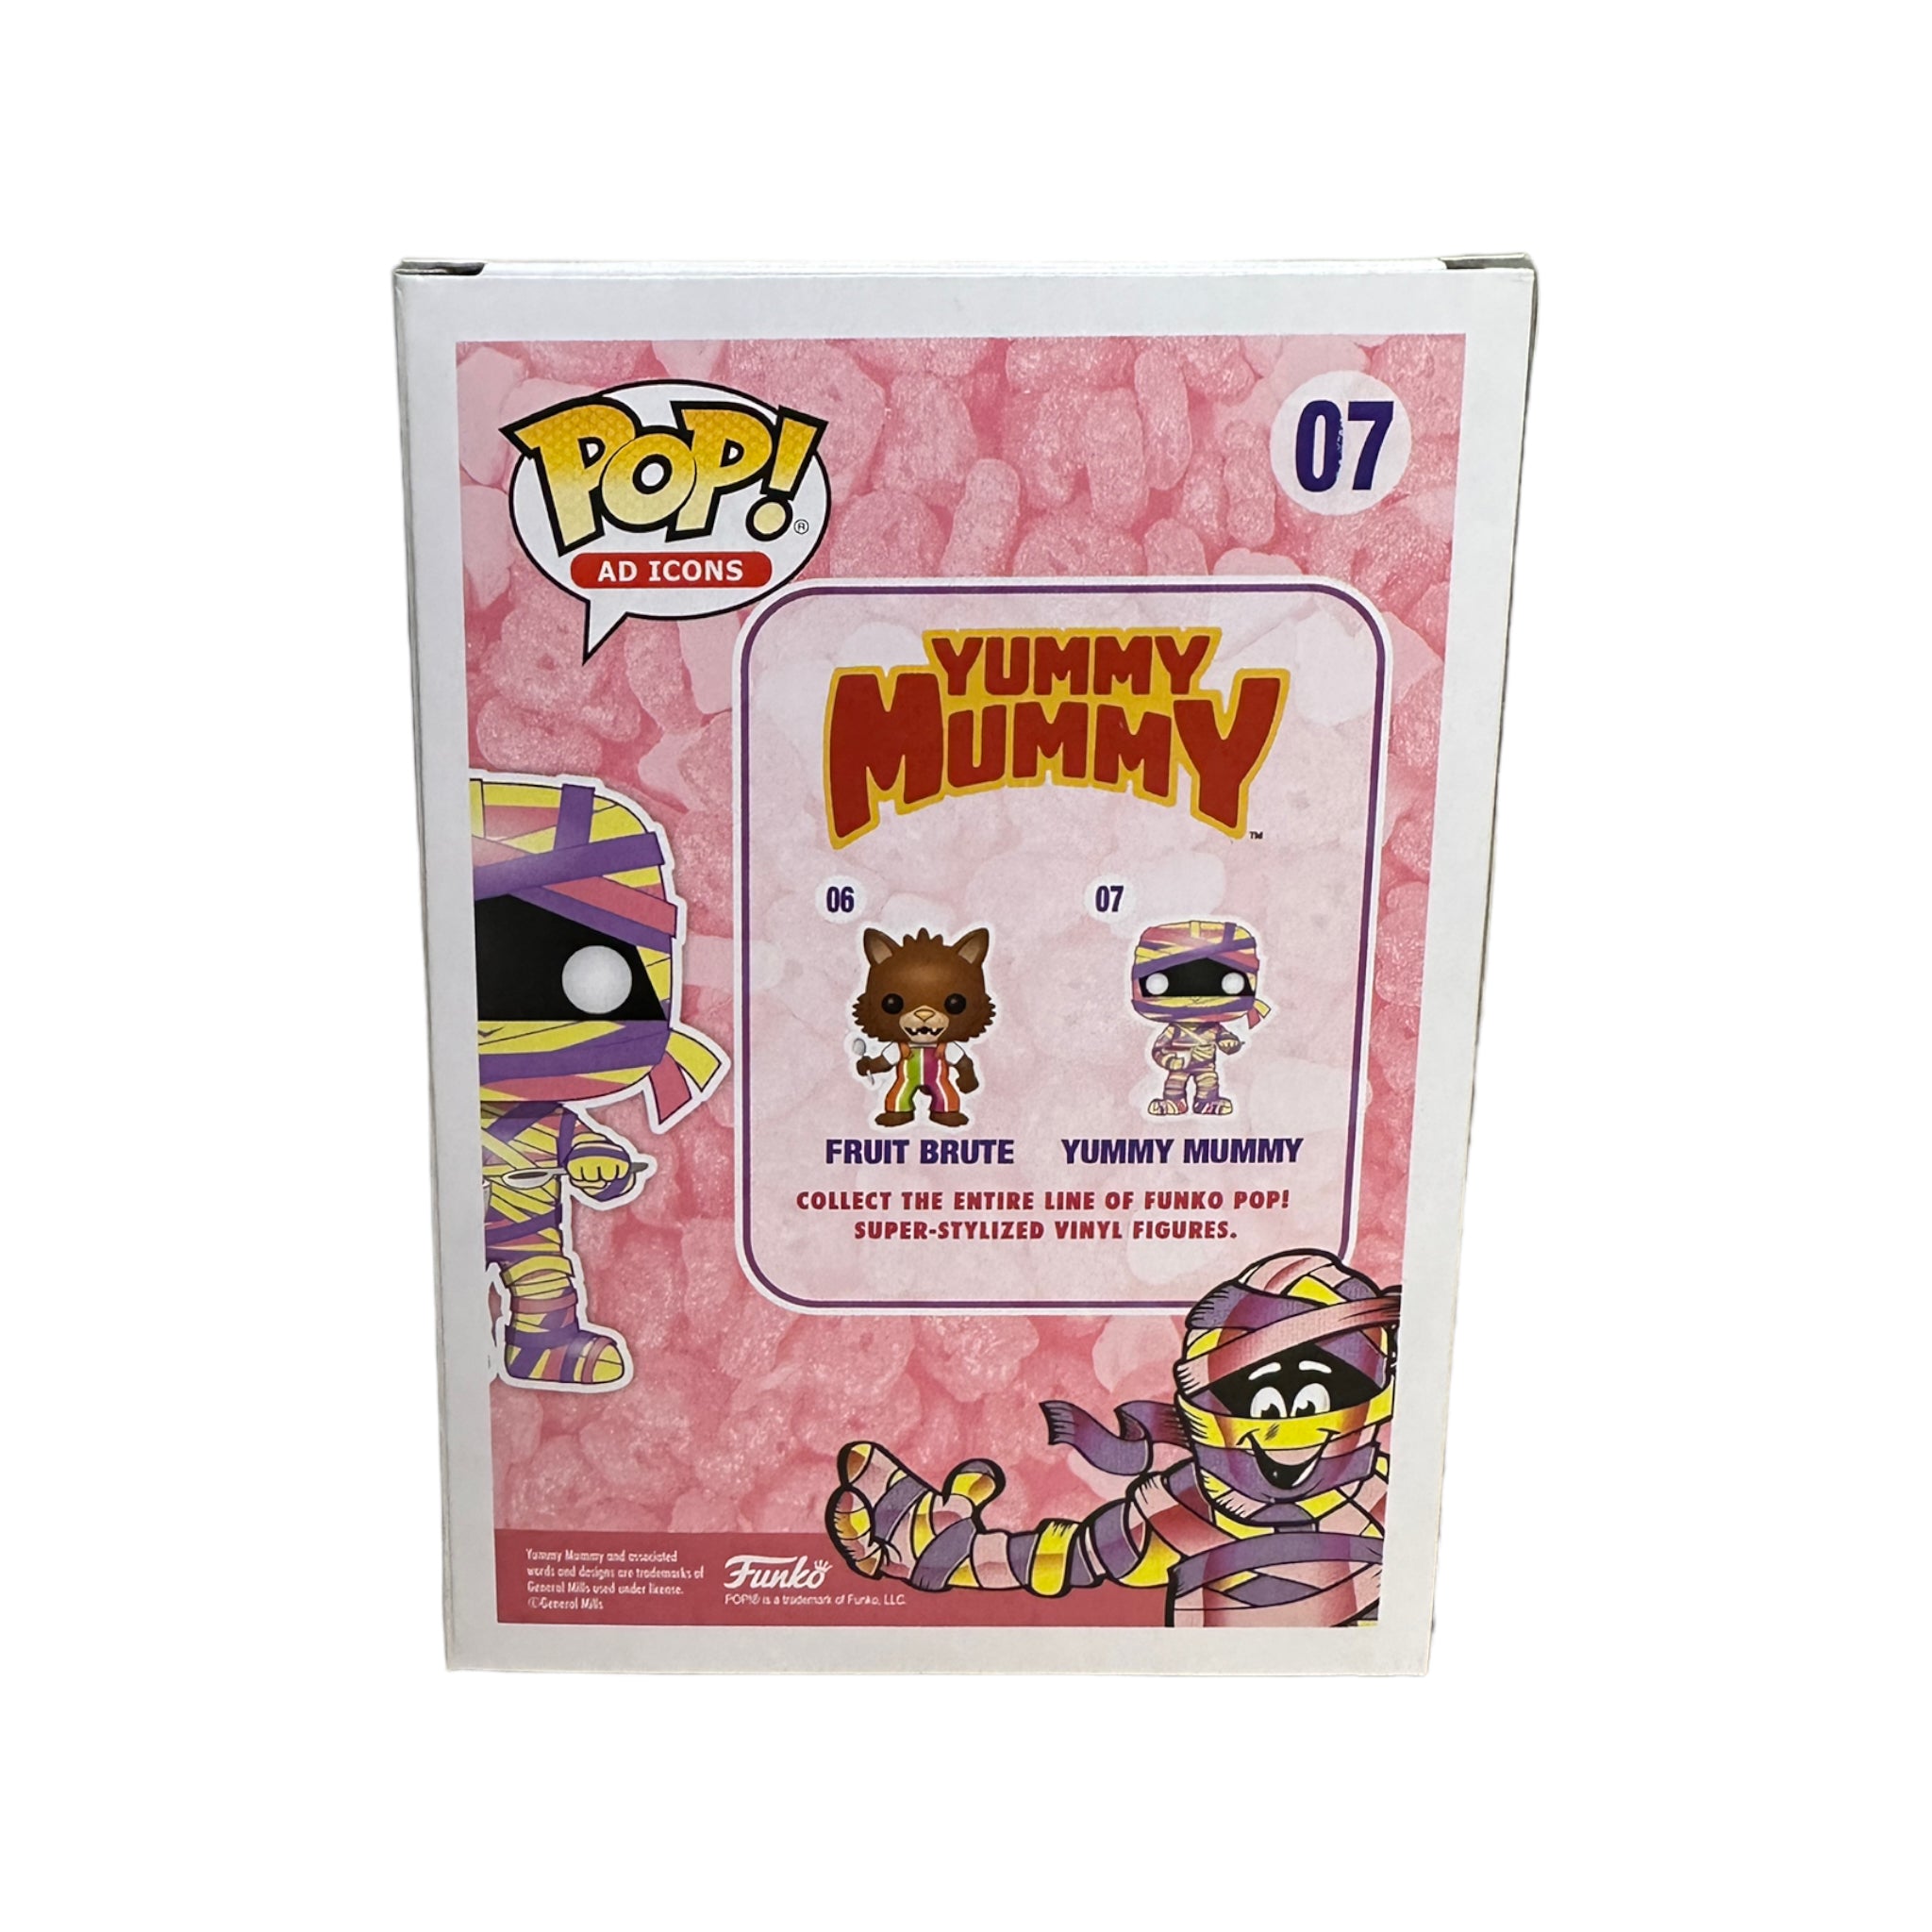 Yummy Mummy #07 Funko Pop! - Ad Icons - Funko Shop Exclusive LE2500 Pcs - Condition 8.5/10